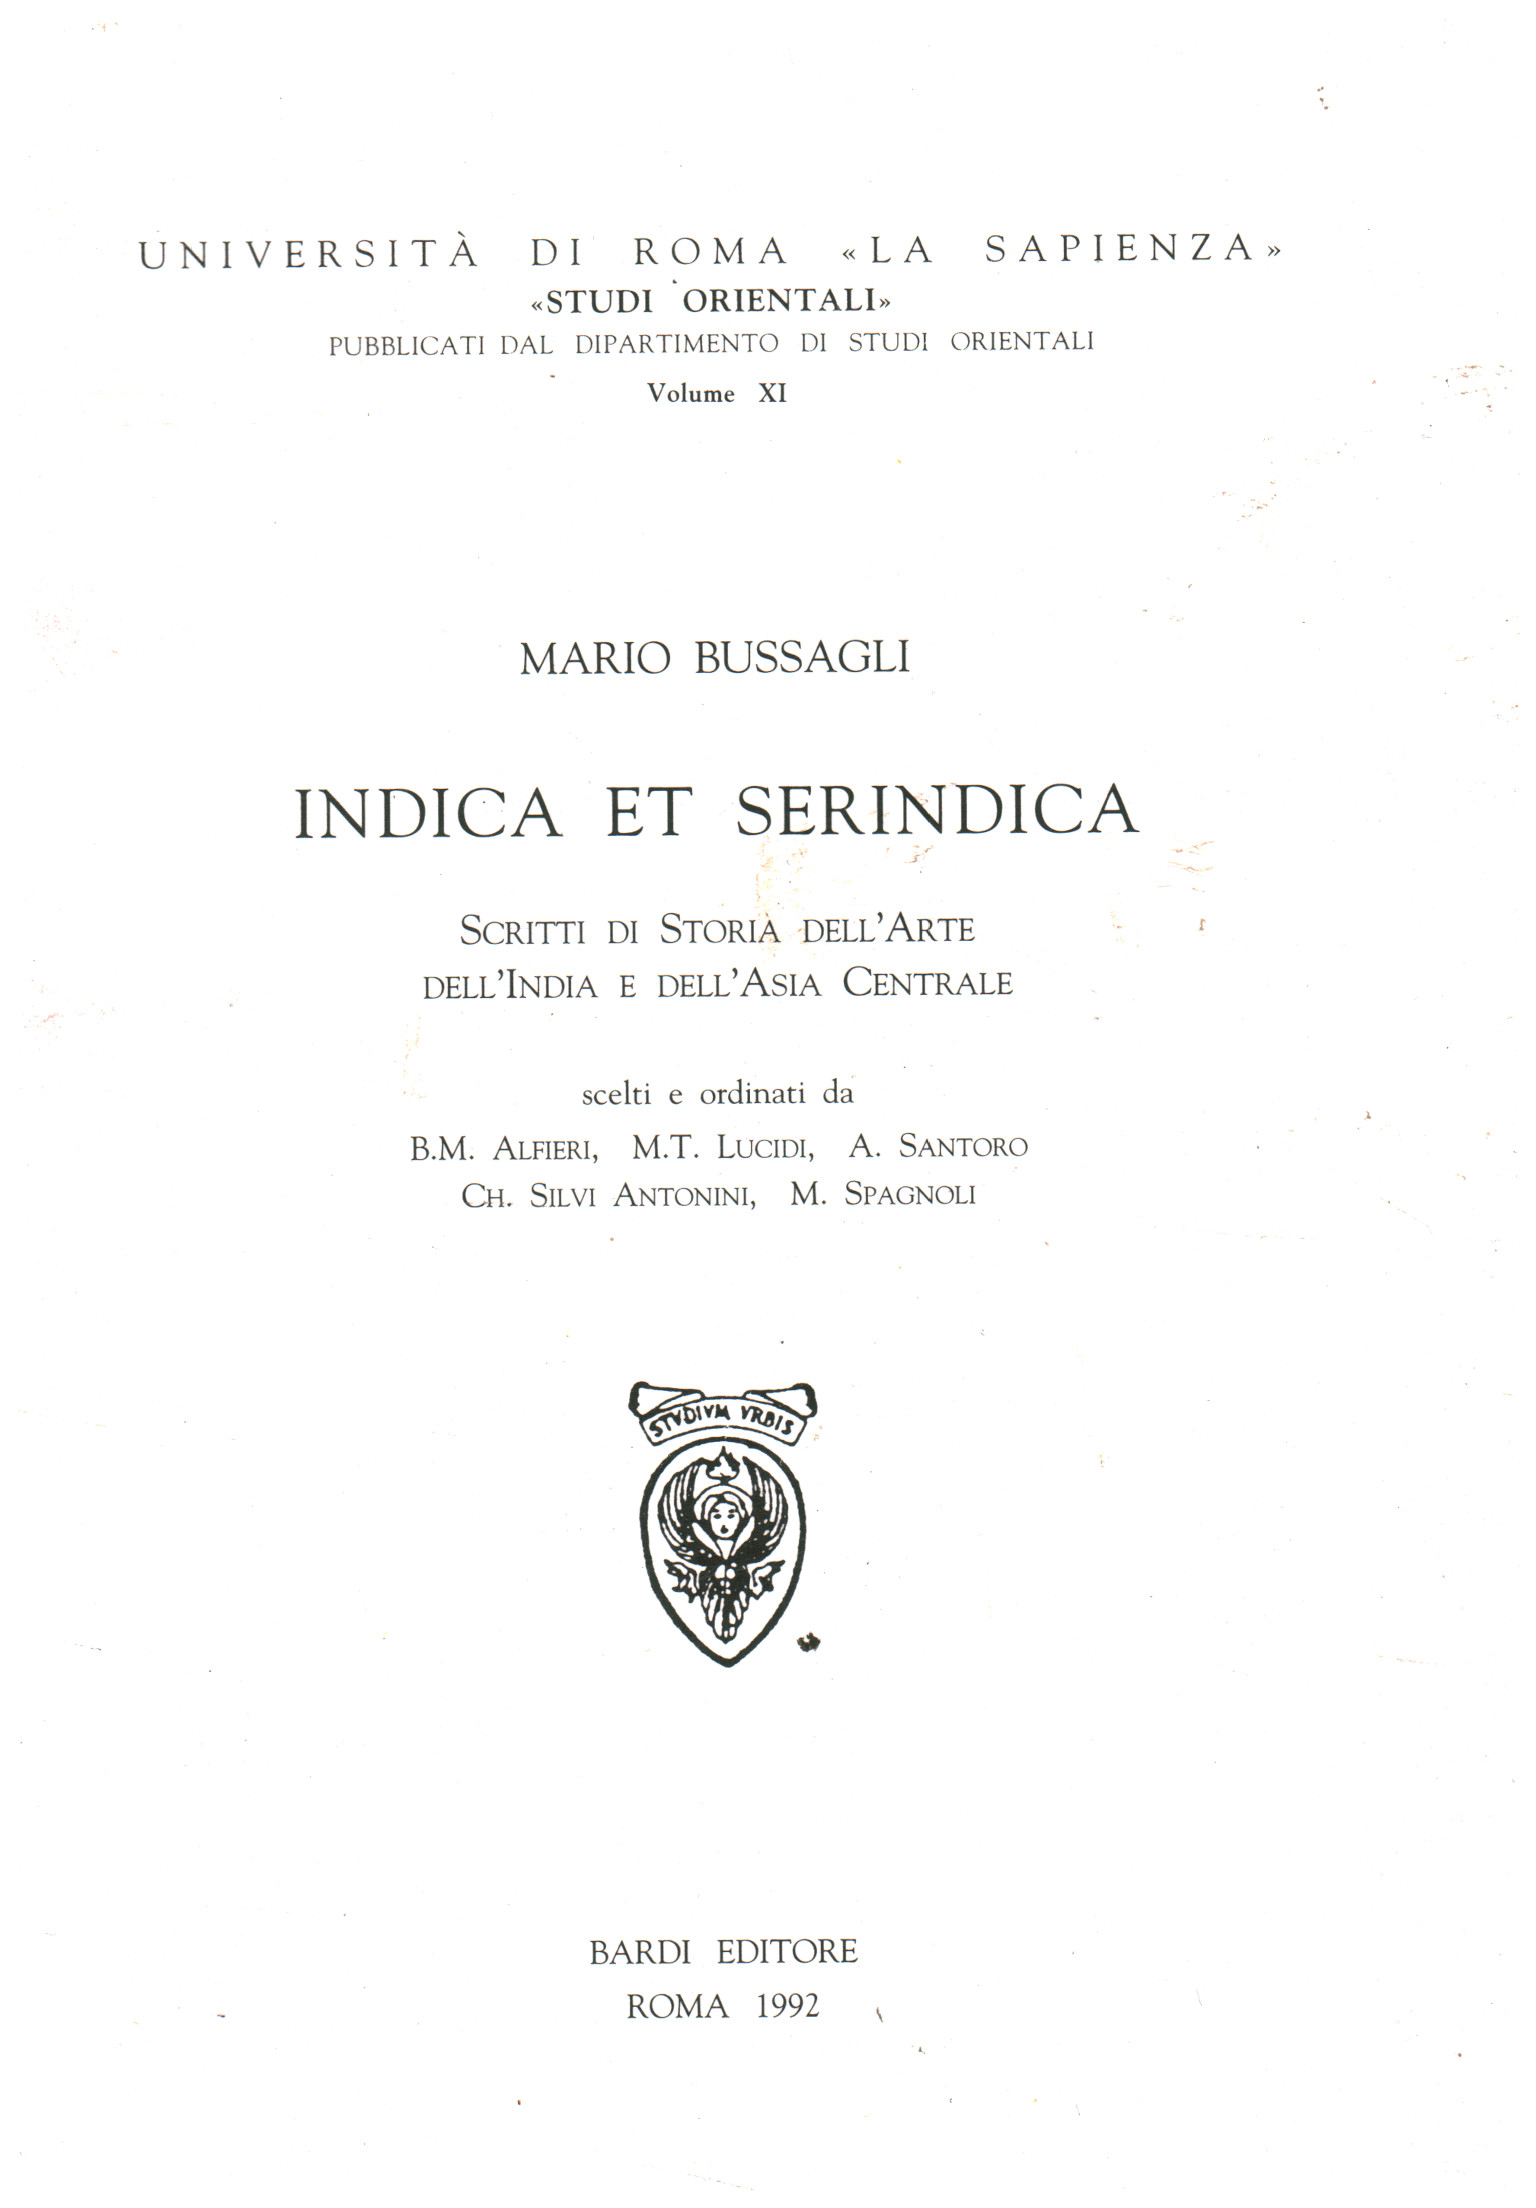 Indica and serindica